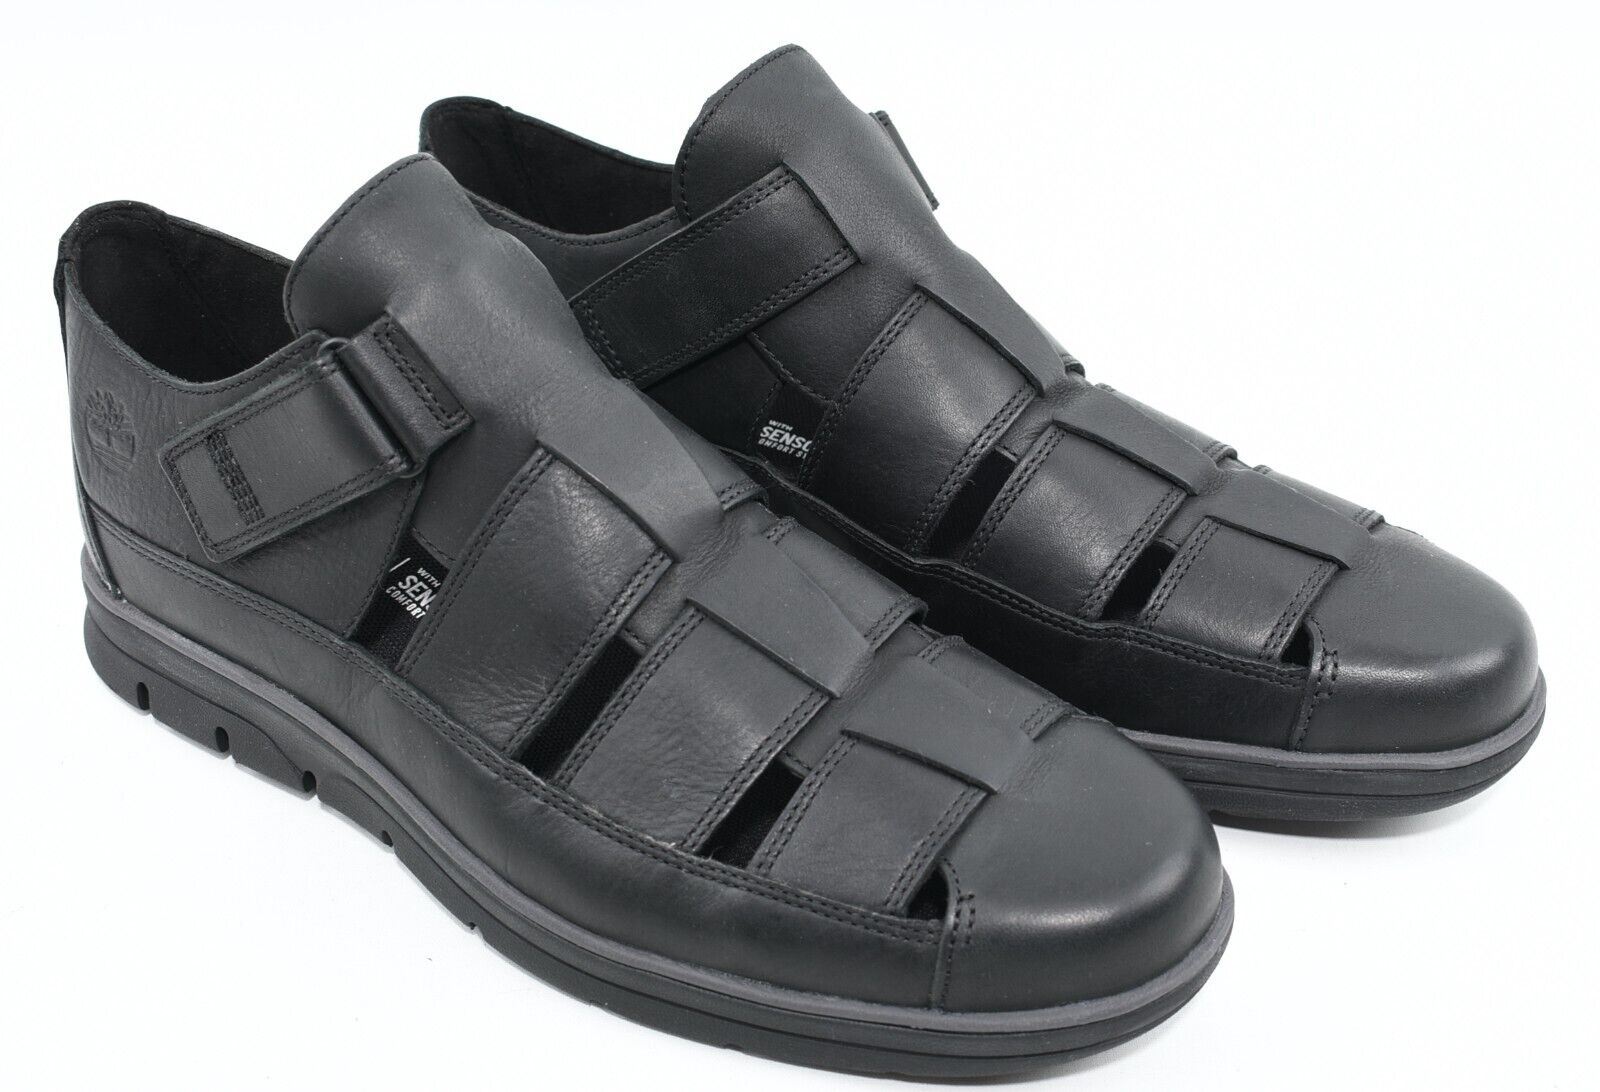 TIMBERLAND Mens BRADSTREET FISHERMAN Leather Sandals, Black, size UK 9 / EU 43.5